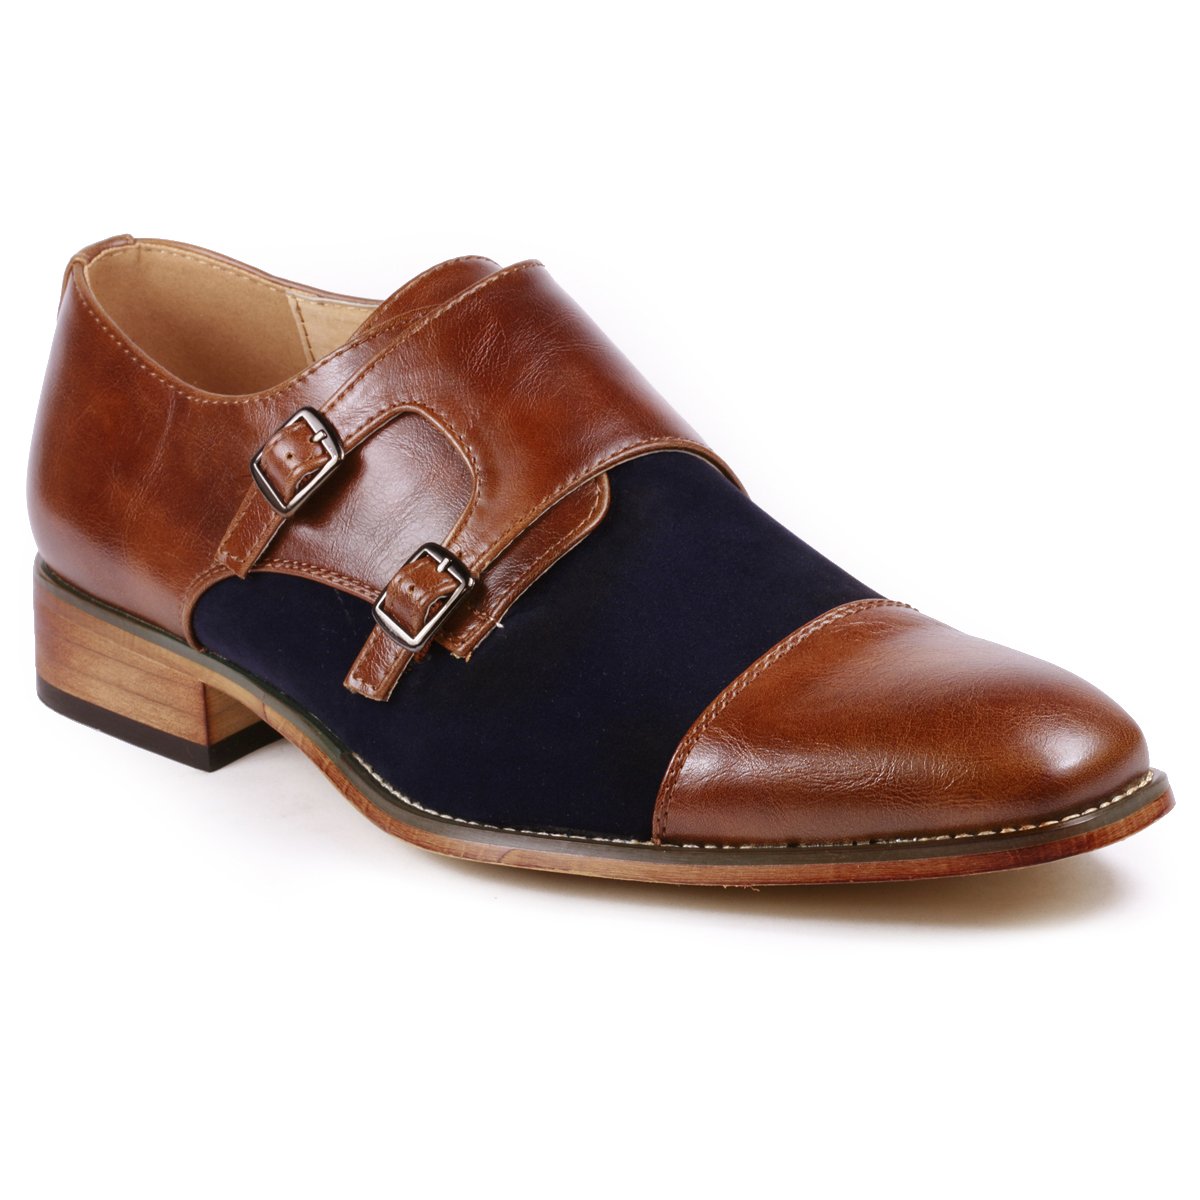 Metrocharm MC136 Men's Double Monk Strap Oxford Classic Dress Shoes - image 1 of 20